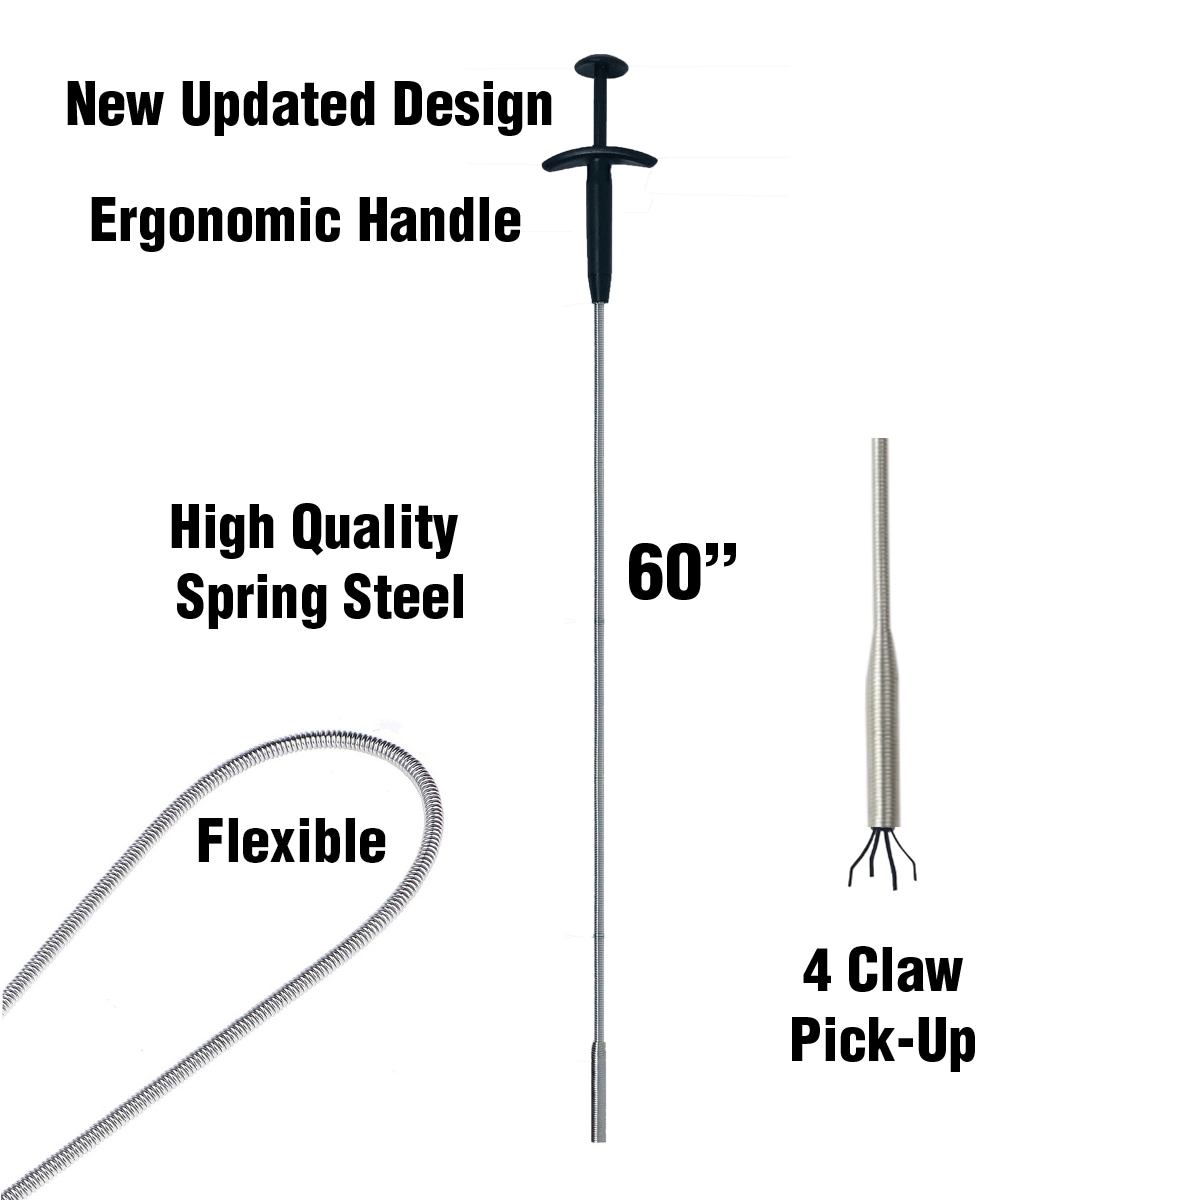 GrabEasy 60 in. Ergonomic Handle, Flexible, 4 Claw Pick-Up Tool